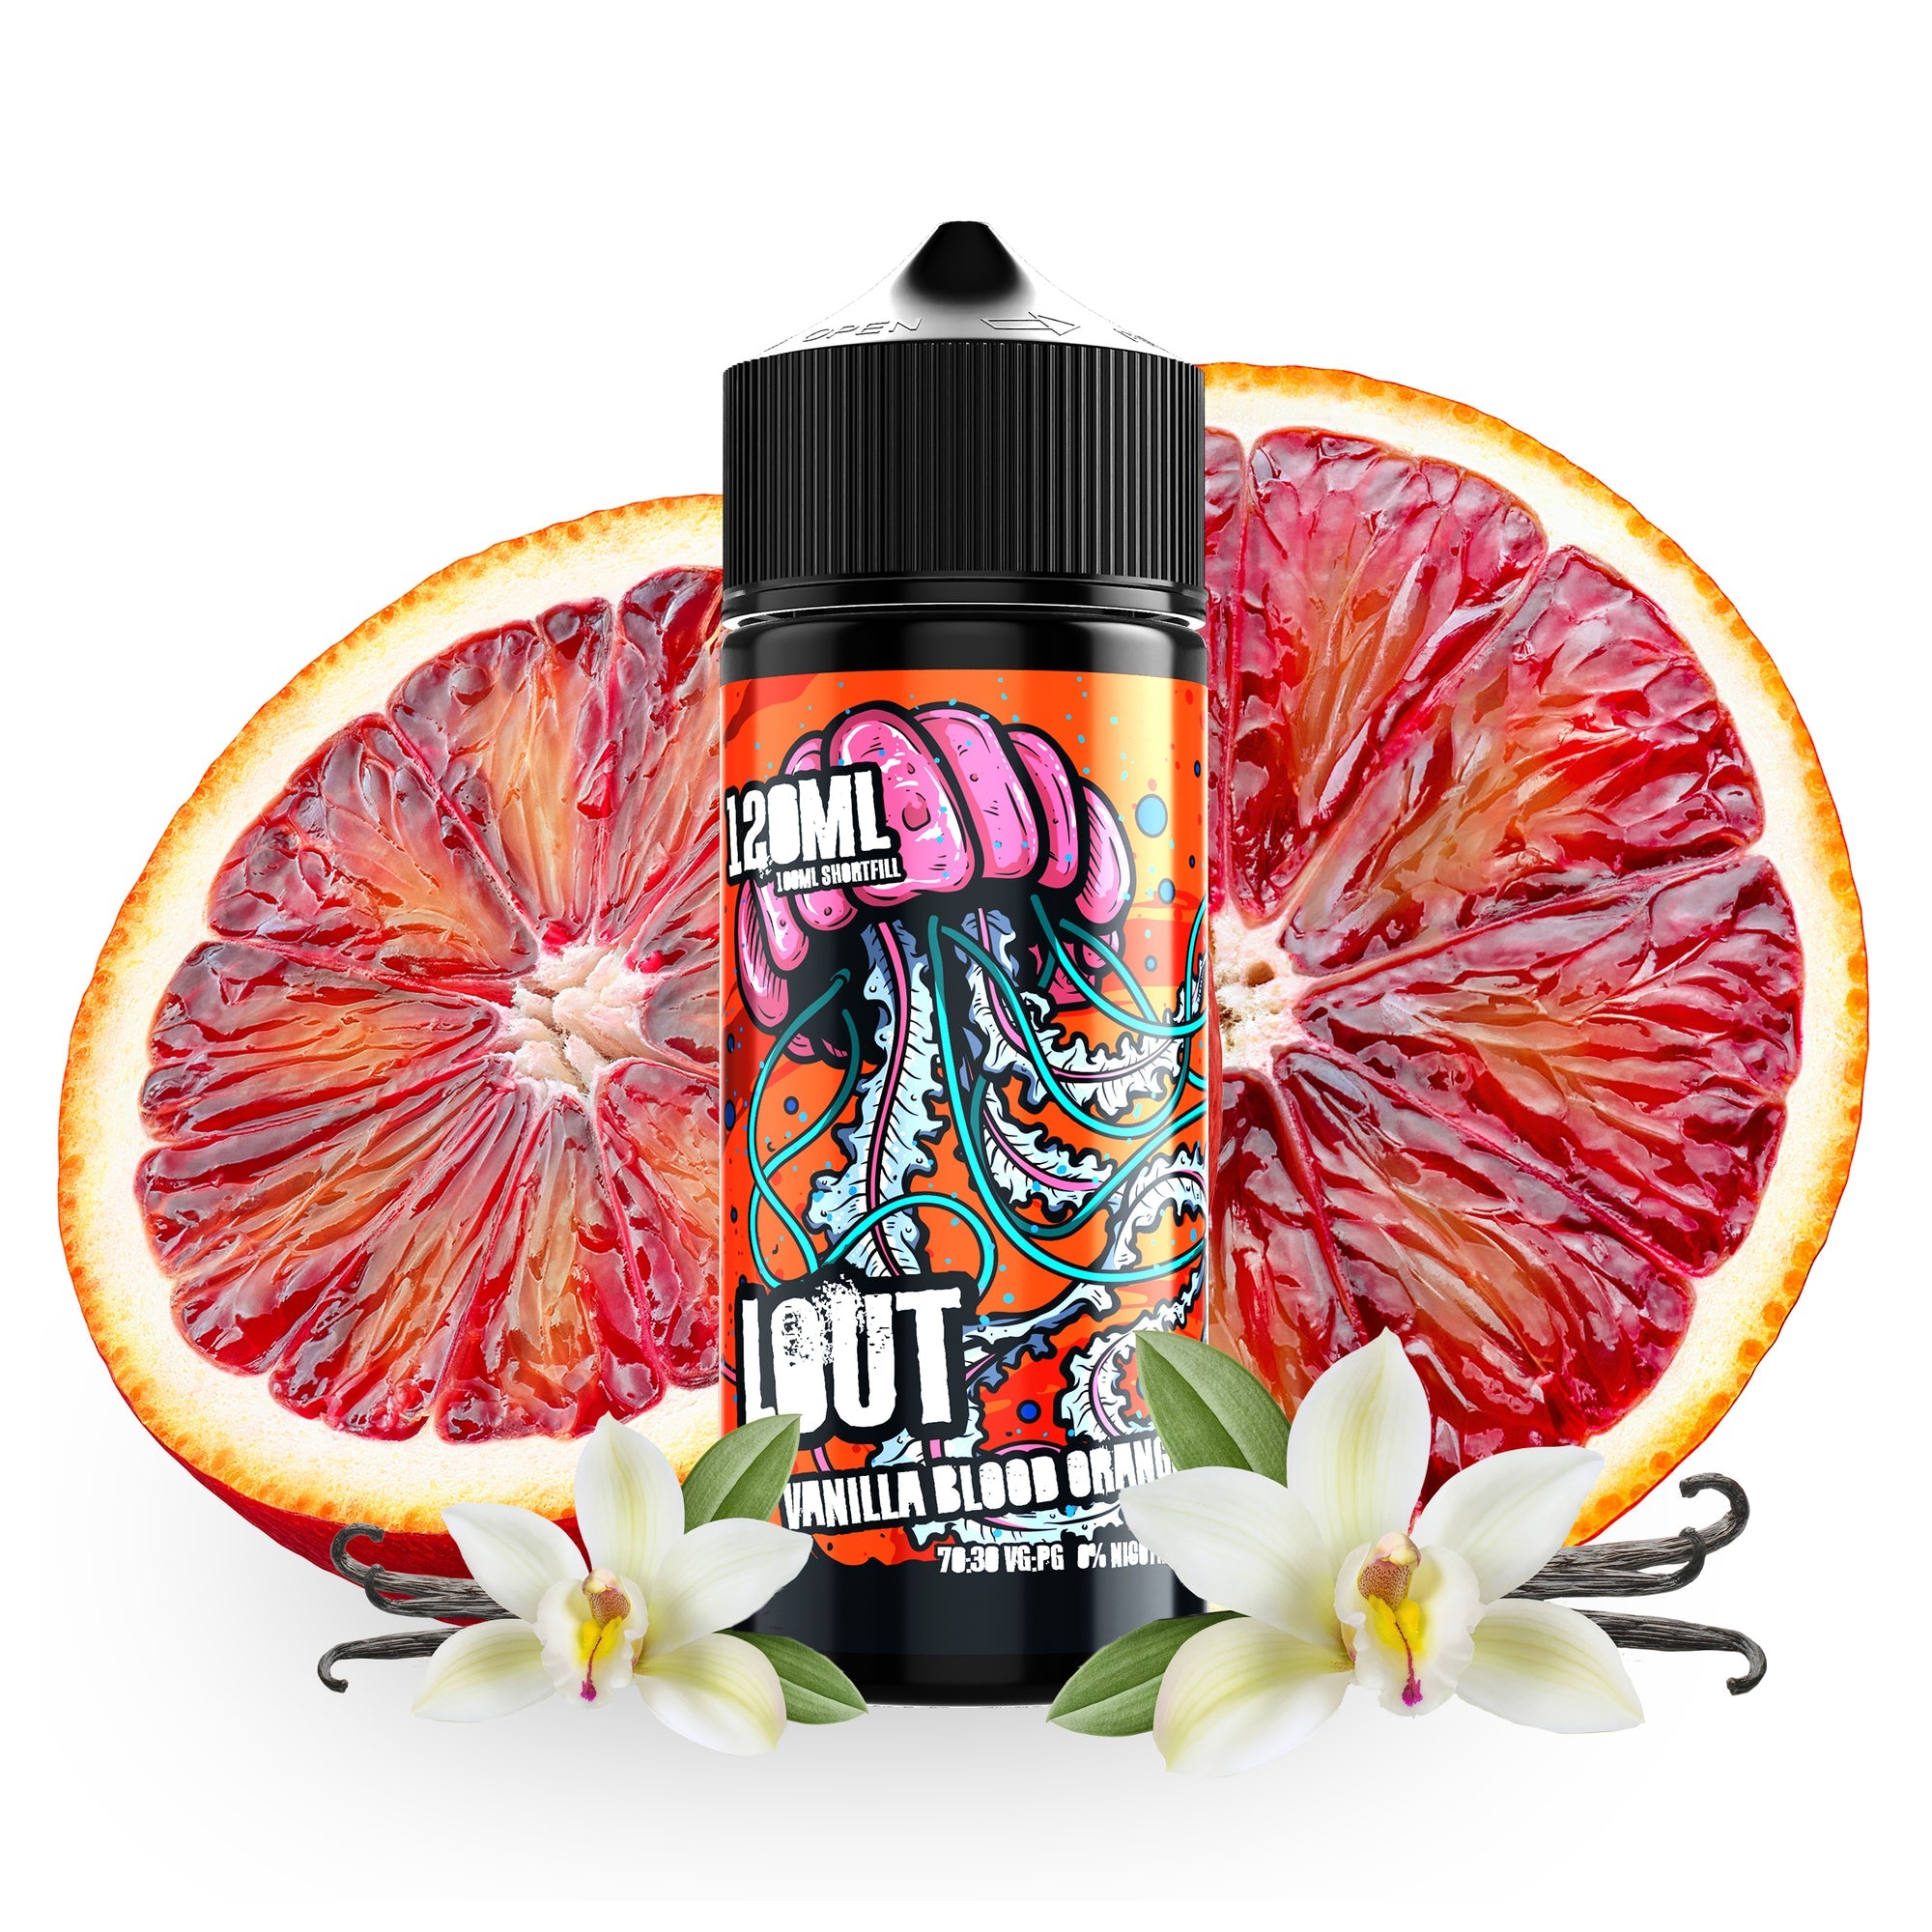 Lout-Vanilla Blood Orange